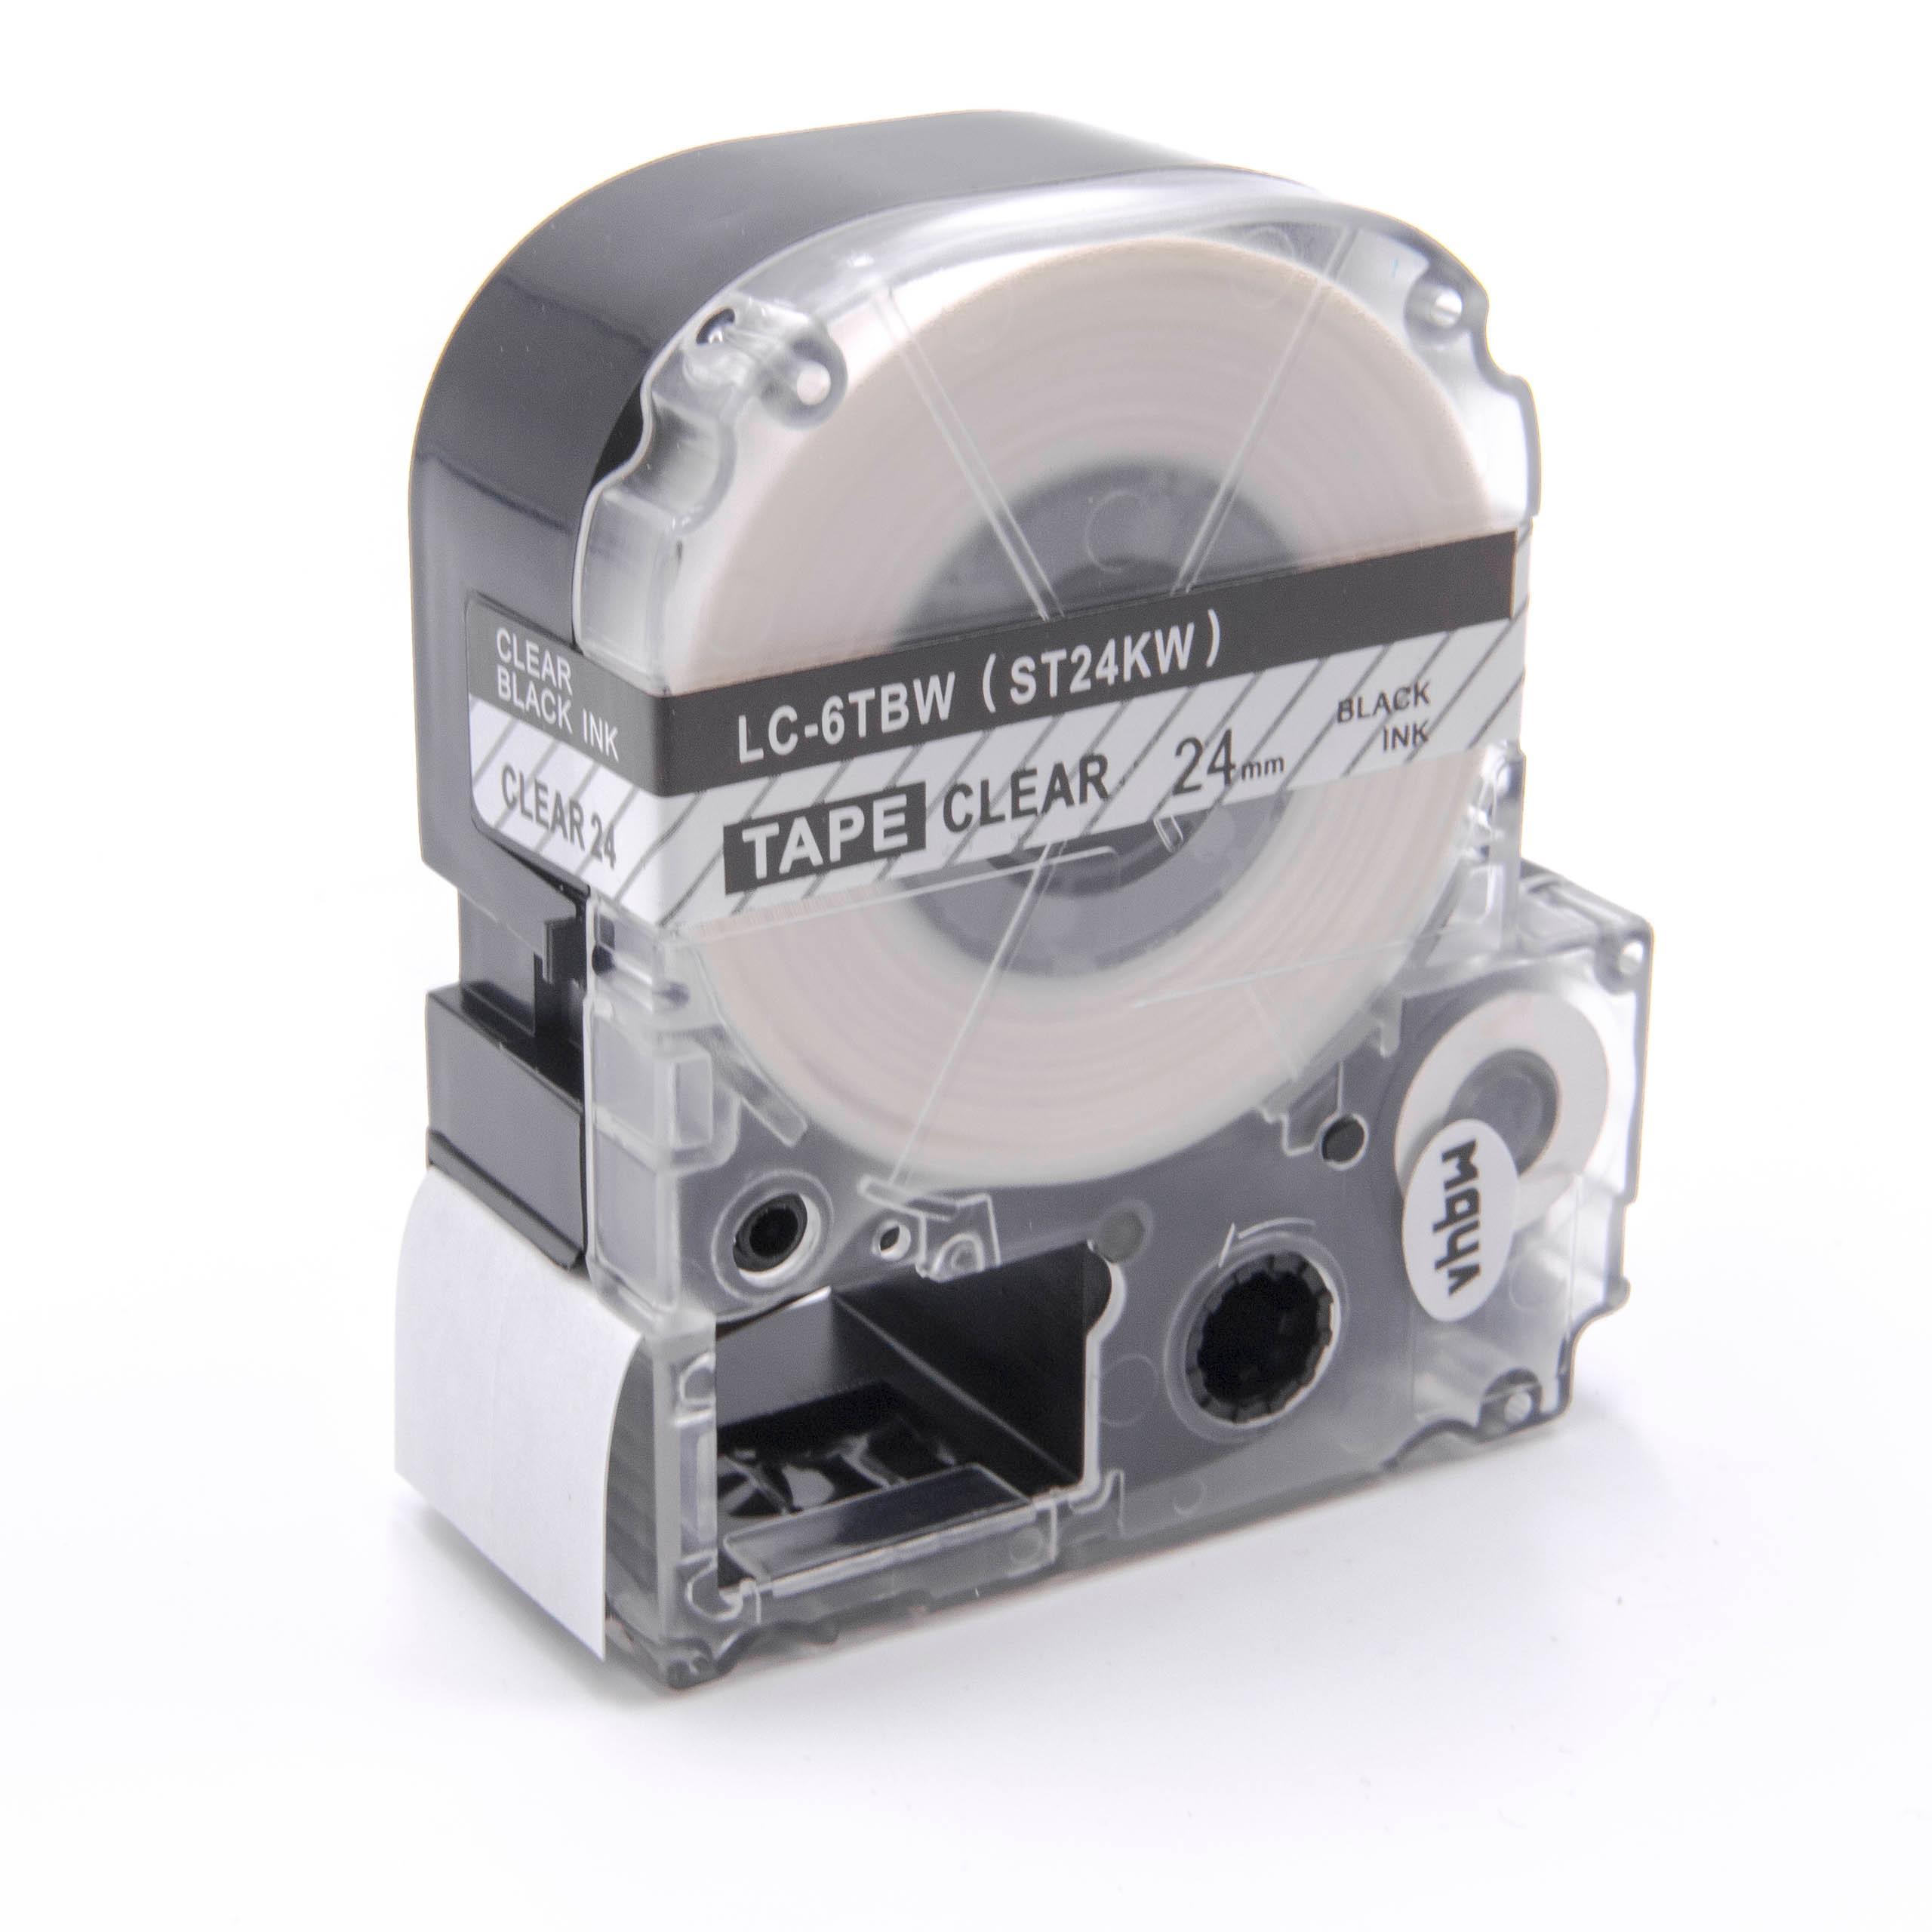 Casete cinta escritura reemplaza Epson LC-6TBW Negro su Transparente